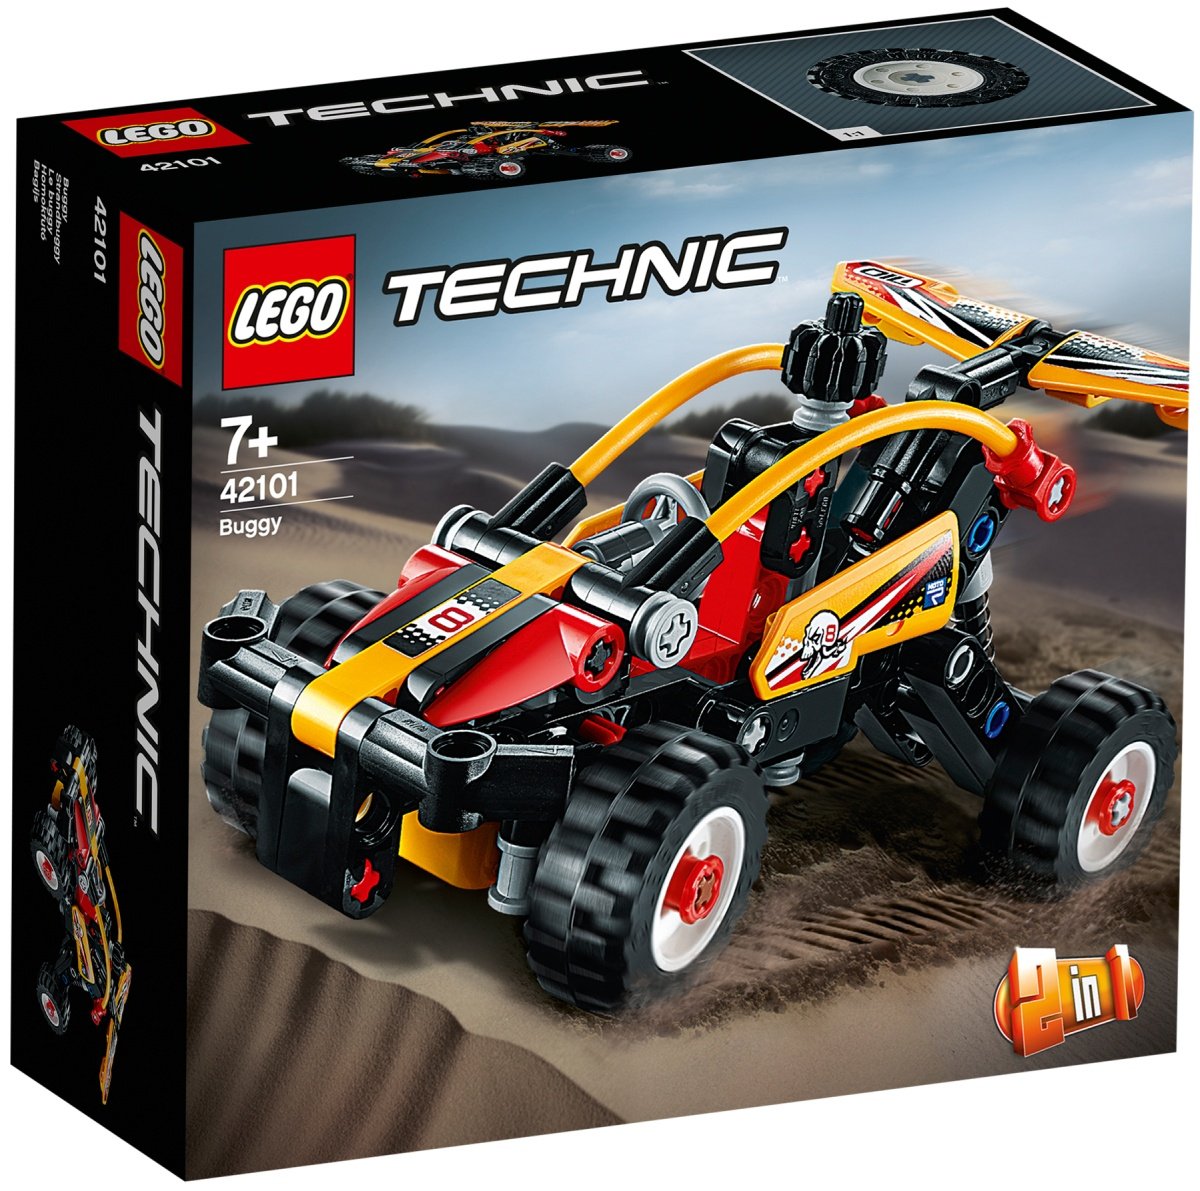 LEGO Technic 2020 Official Set Images - The Brick Fan